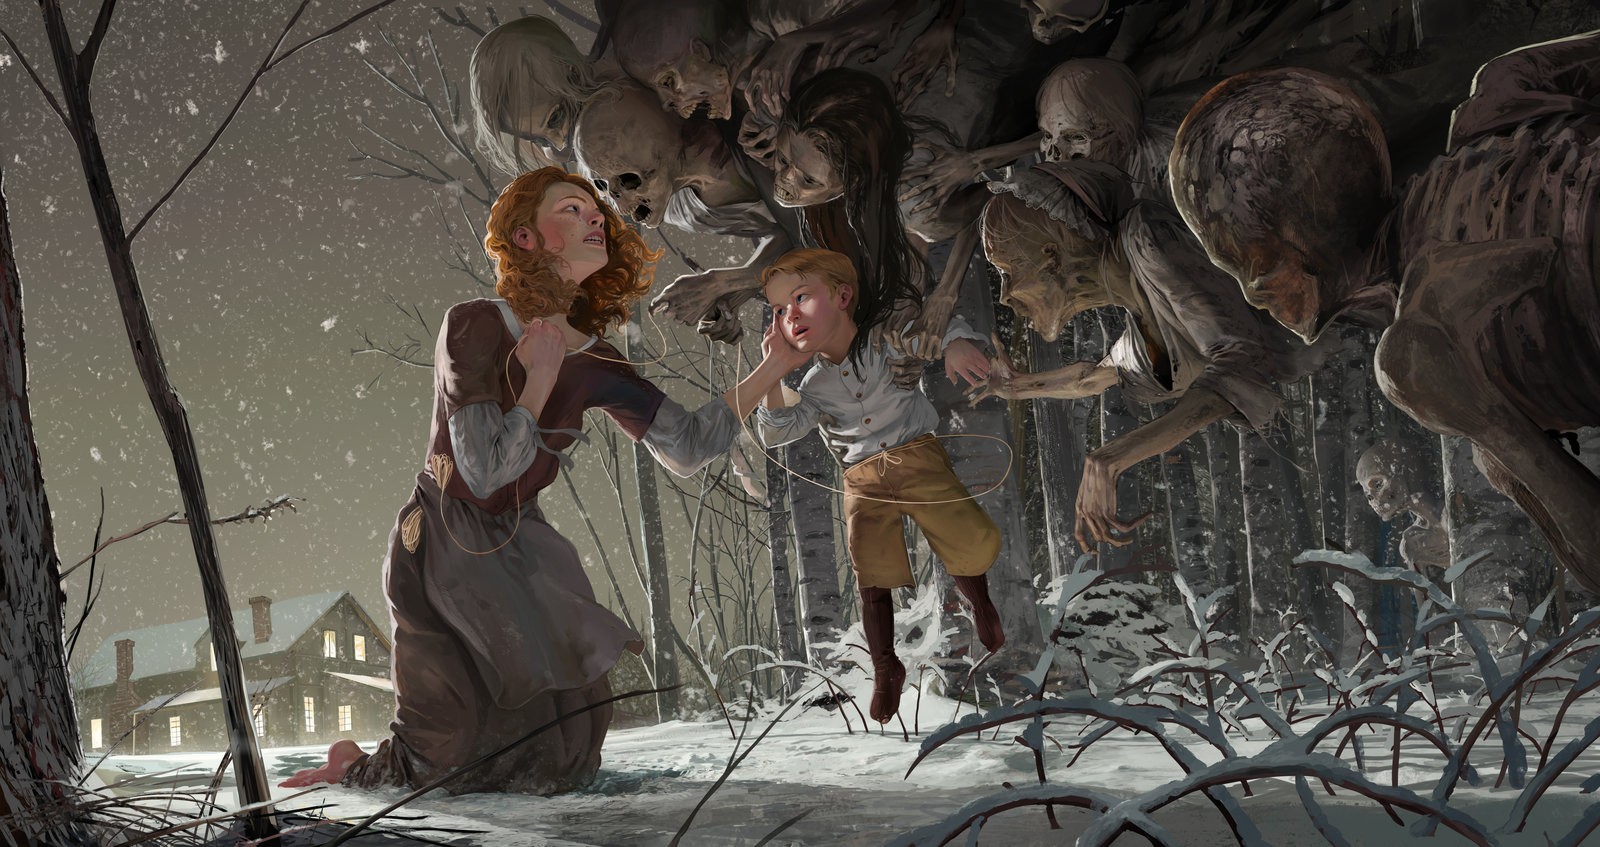 Artwork Digital Art Scary Face Horror Creepy Winter Death Zombies Children Mother 1600x847